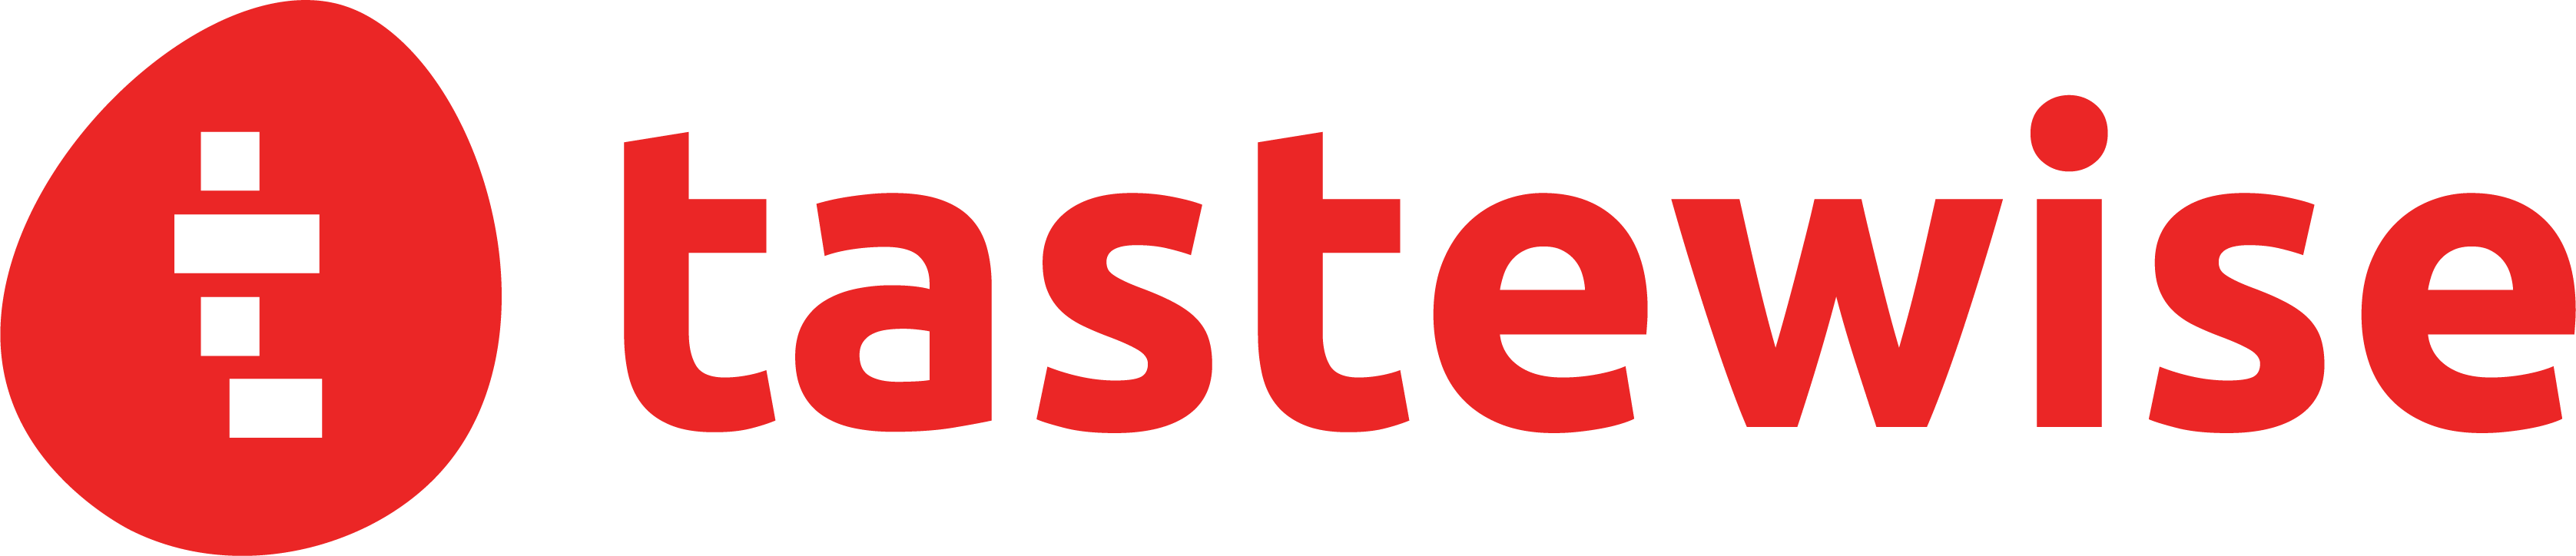 tastewise-logo-red